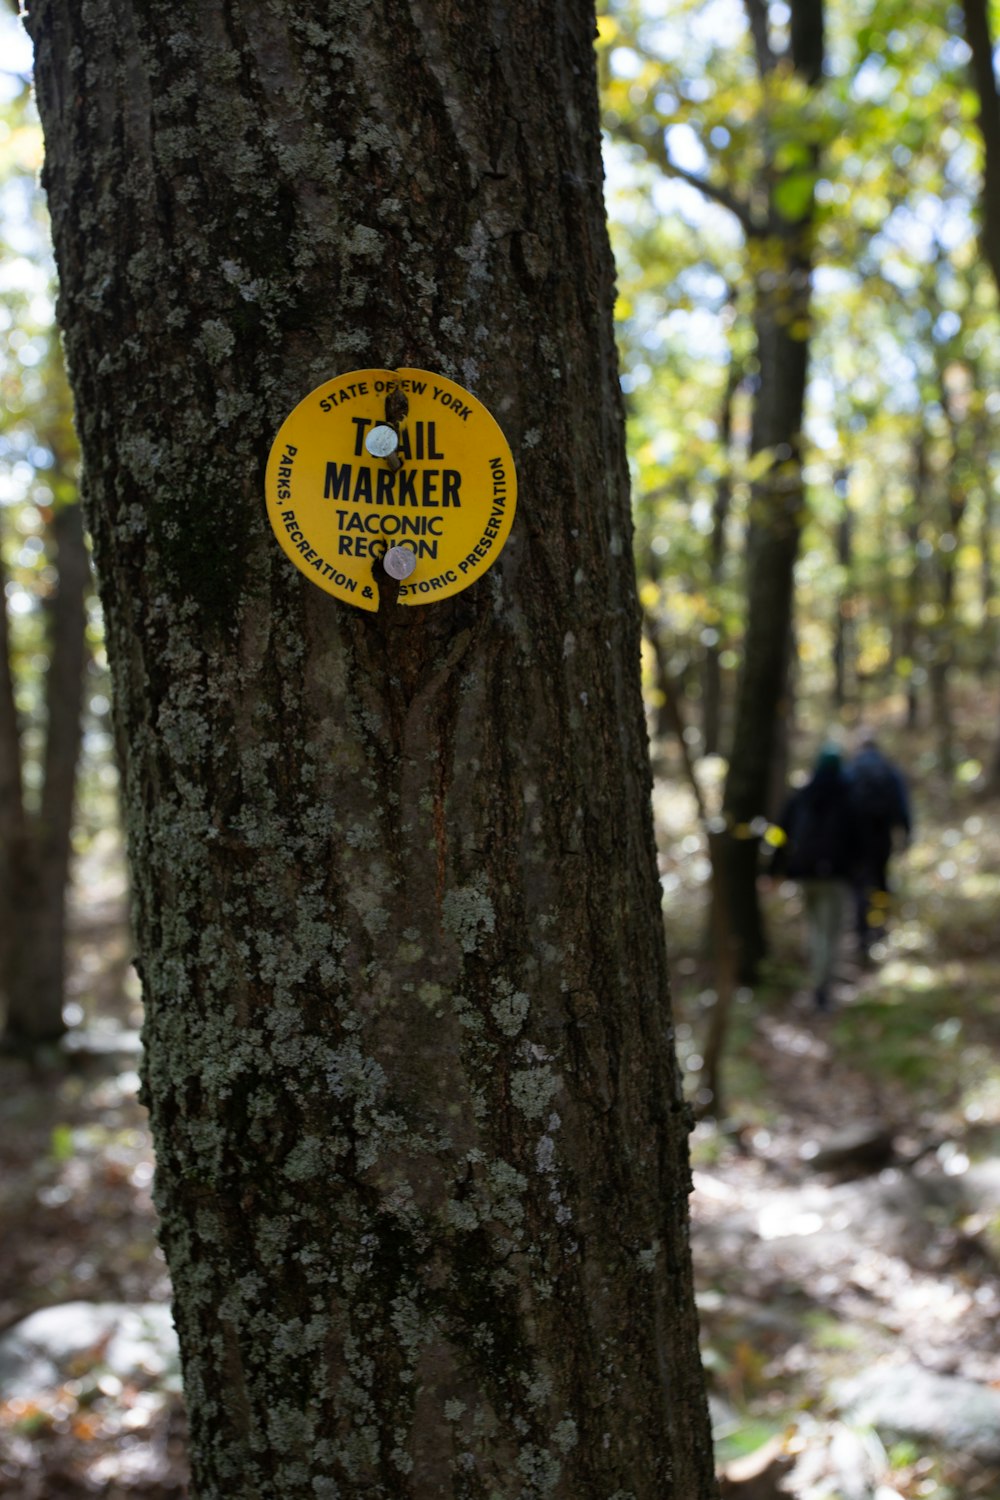 trail marker on tree